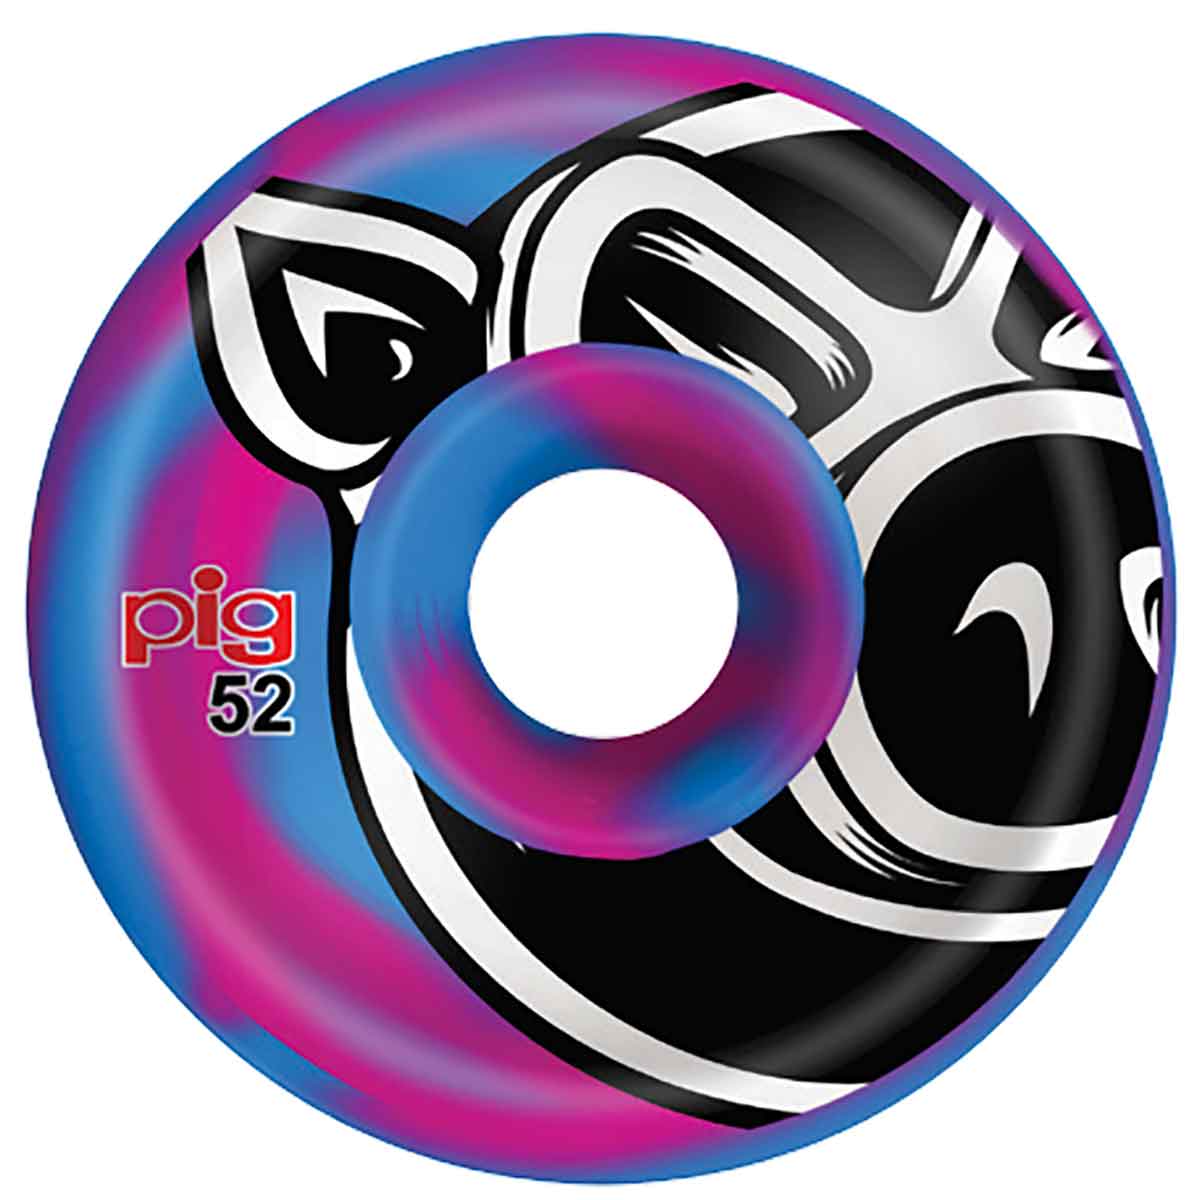 PIG WHEELS PIGHEAD SWIRL PINK/BLUE CONICAL 101A (52MM) - The Drive Skateshop